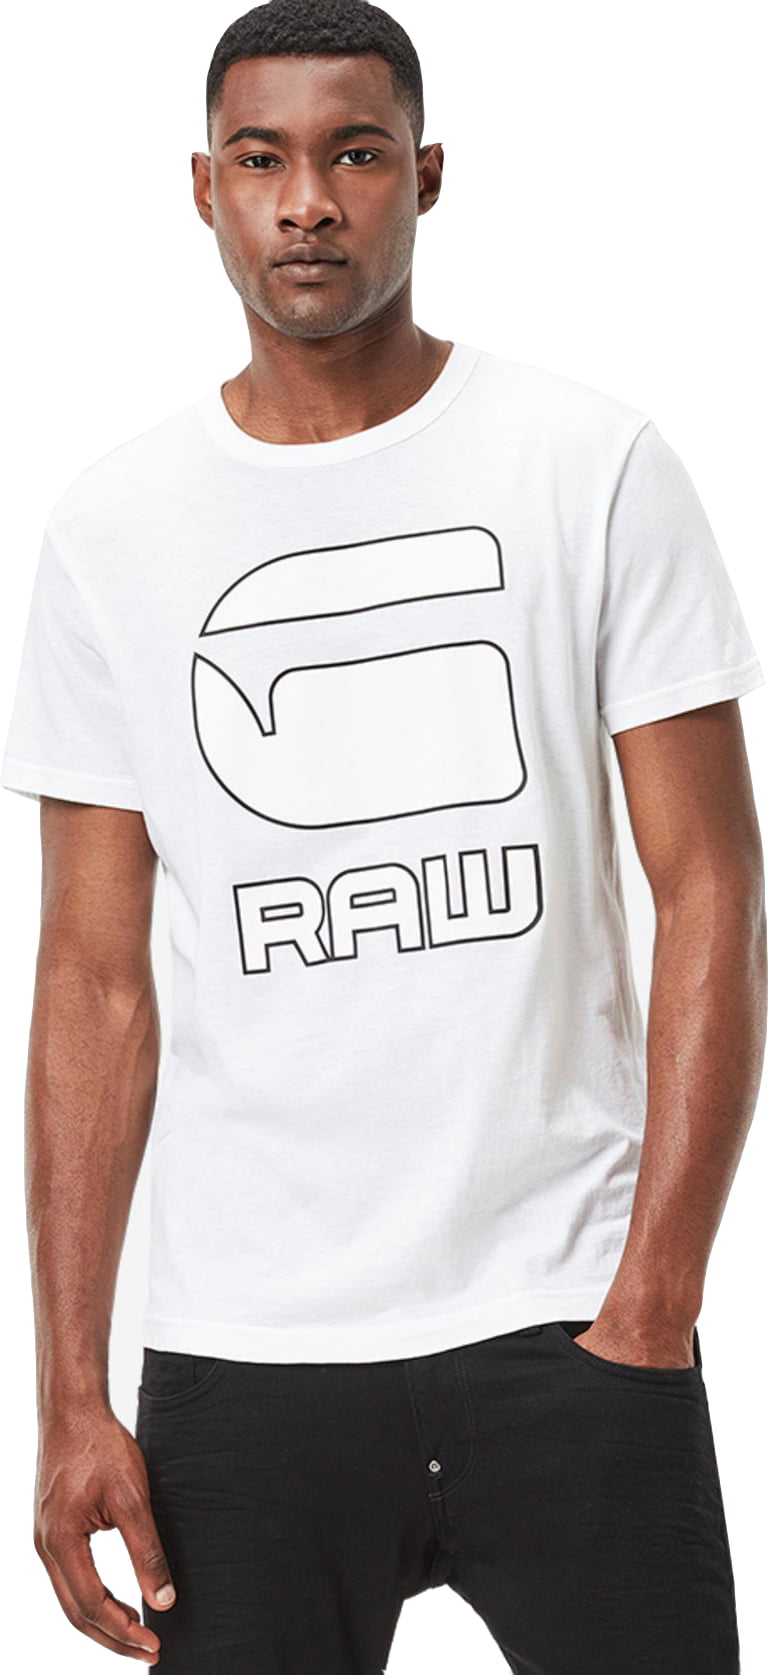 Forslag Garanti Secréte G-Star RAW Mens Cadulor T-Shirt d04461 - Walmart.com